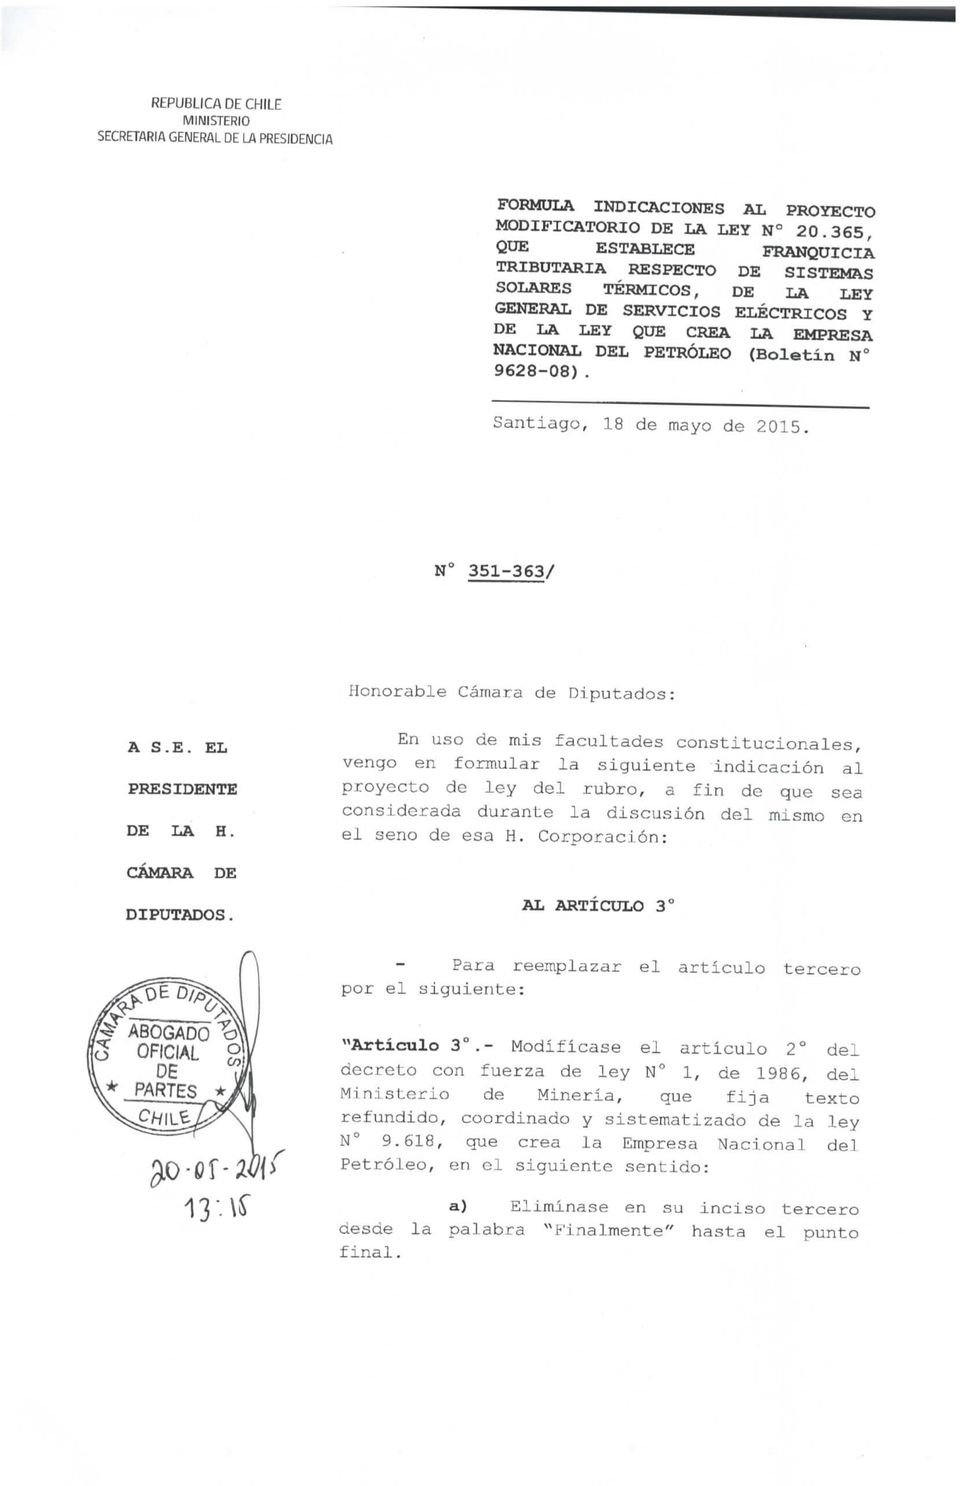 Santiago, 18 de mayo de 2015. N 351-363/ Honorable Cámara de Diputados: A S.E. EL PRESIDENTE DE LA H. CÁMARA DE DIPUTADOS.